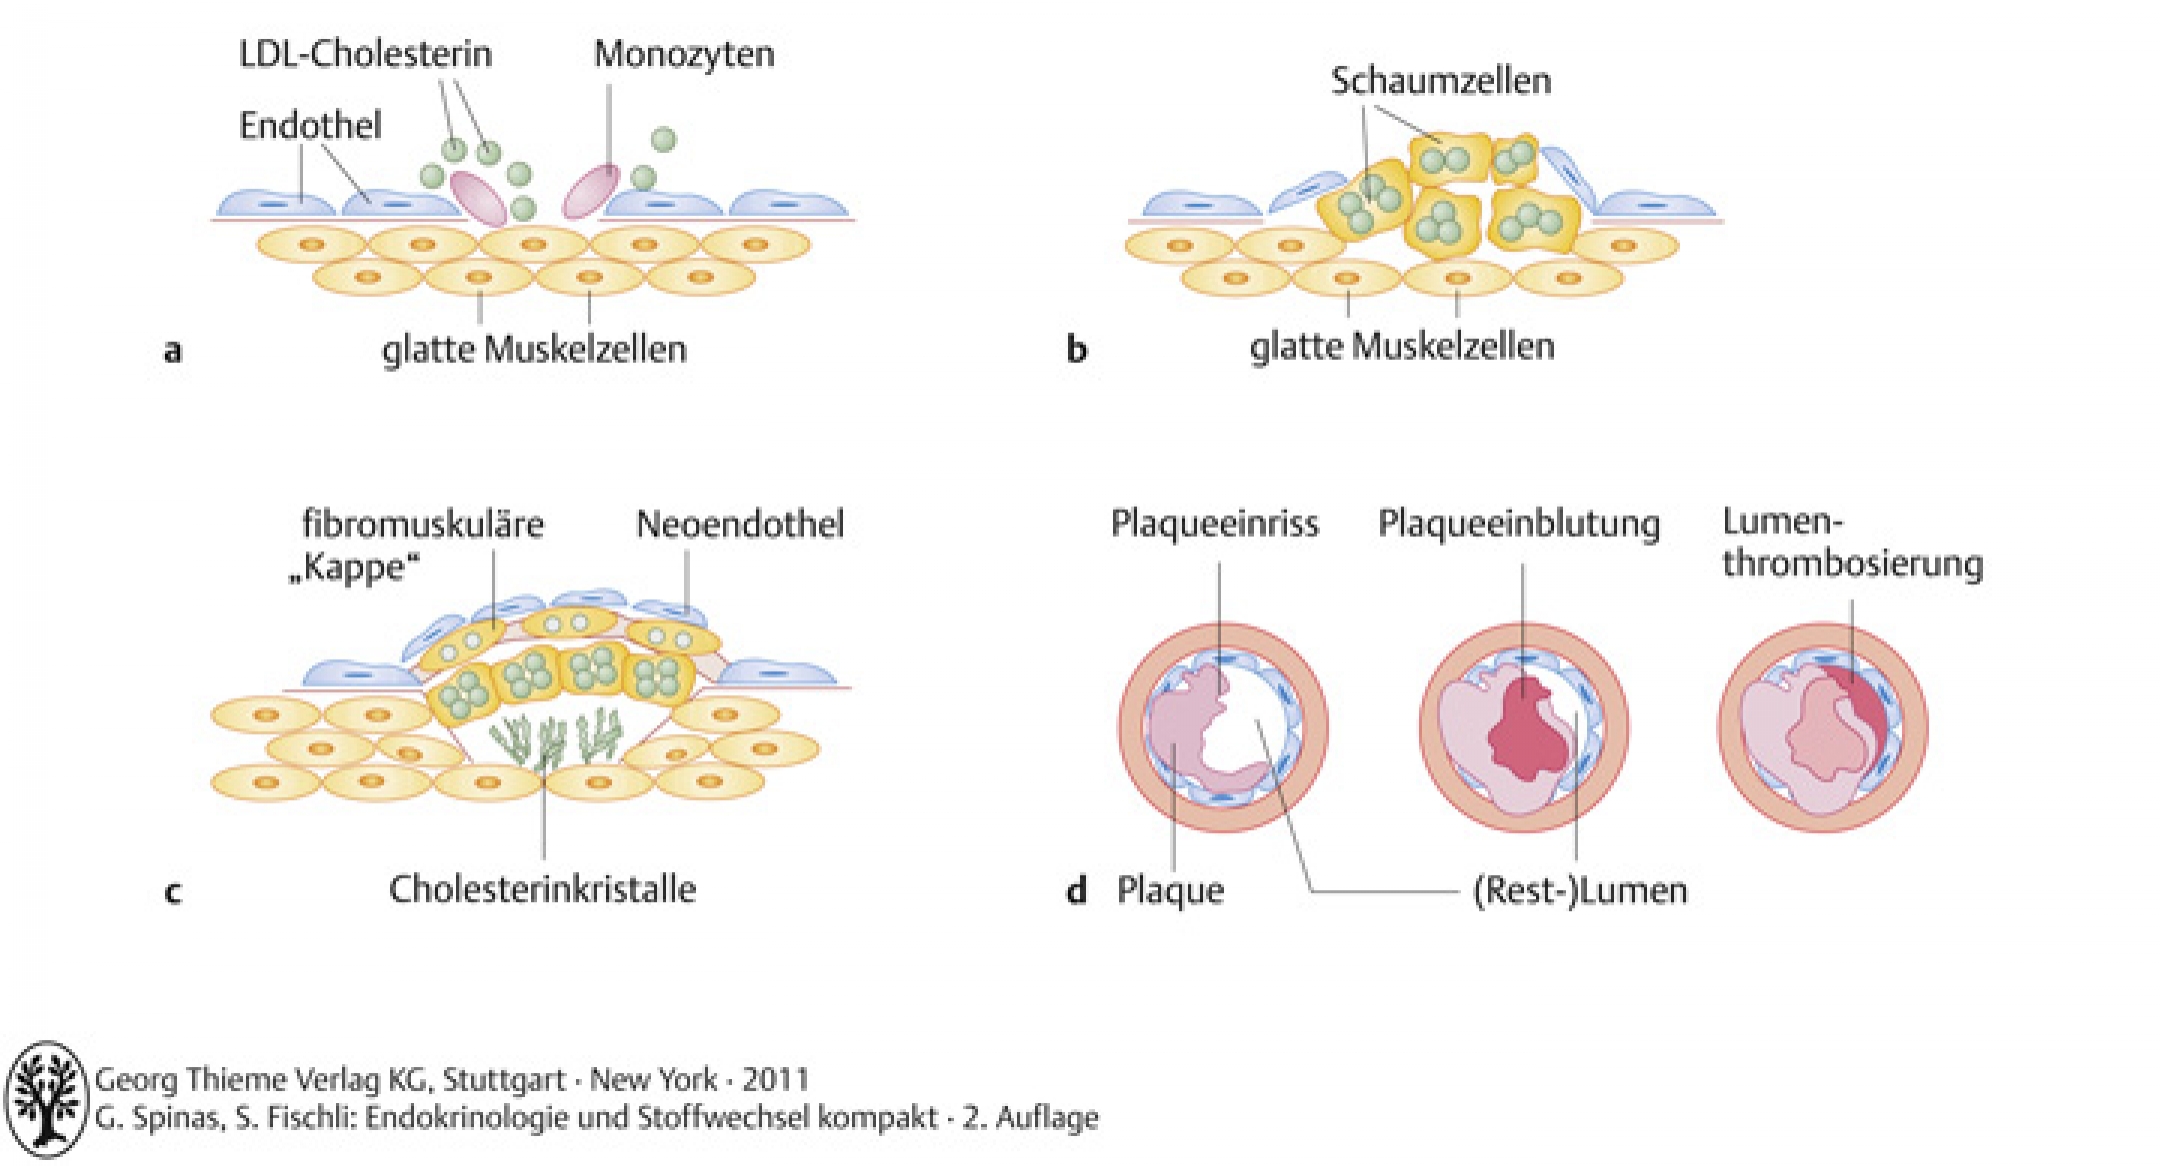 Pathogenese der Atherosklerose. a Endothelläsion, b Frühläsion, c Spätläsion, d Koronarverschluss